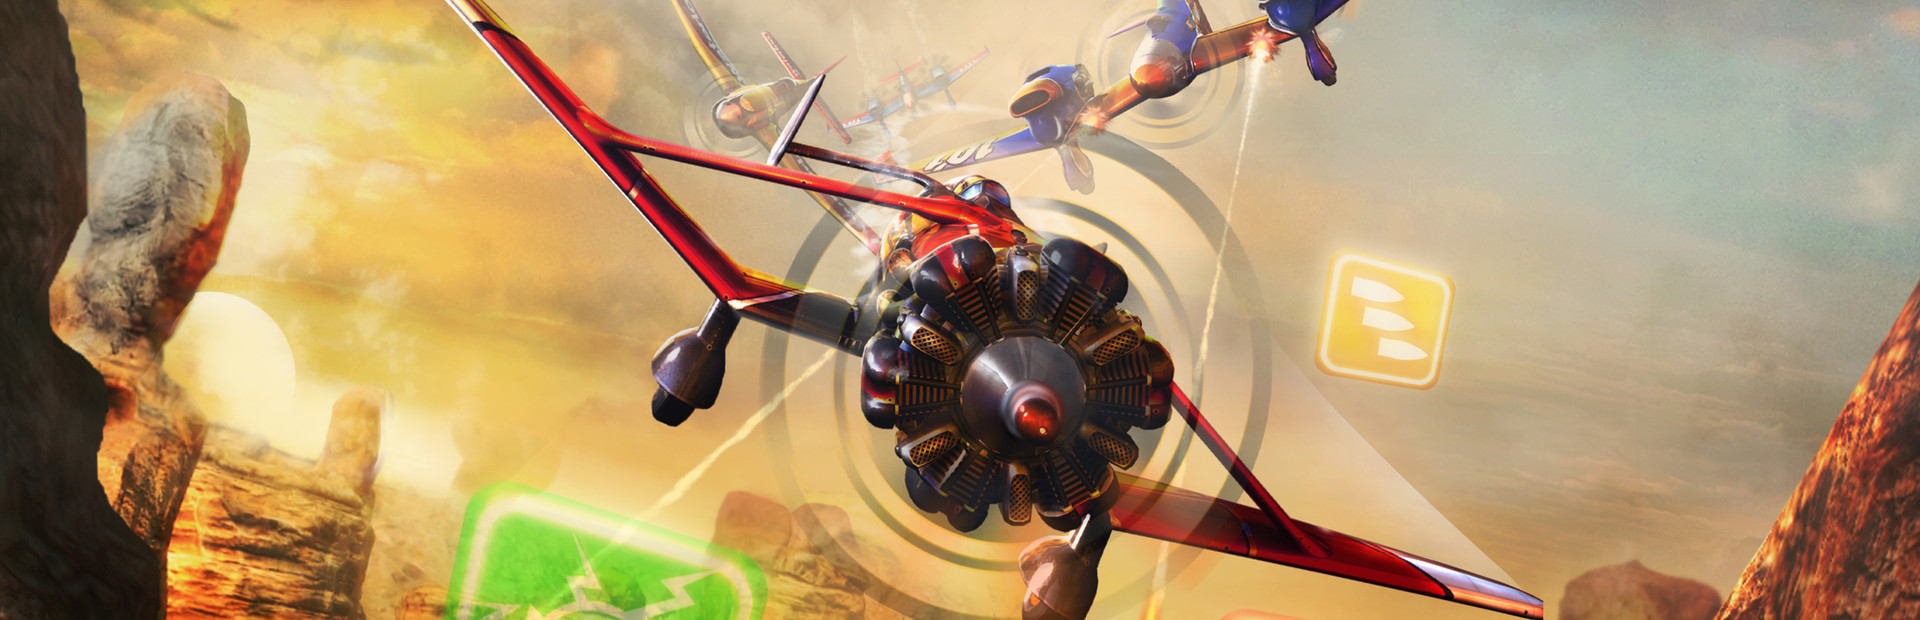 Skydrift Infinity cover image